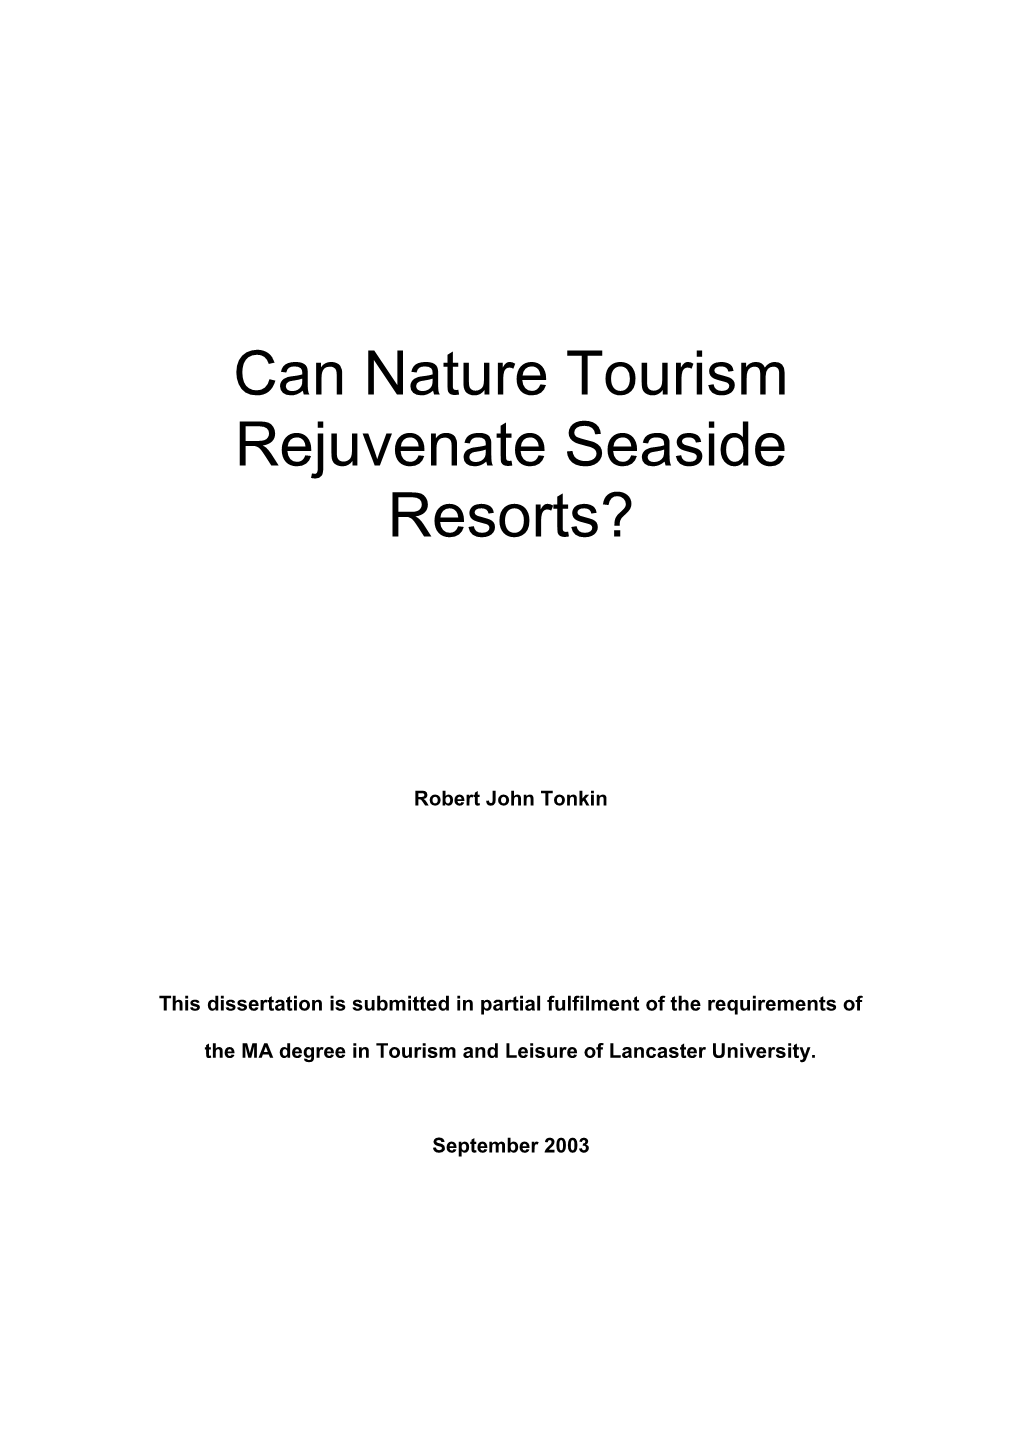 Can Nature Tourism Rejuvenate Seaside Resorts?